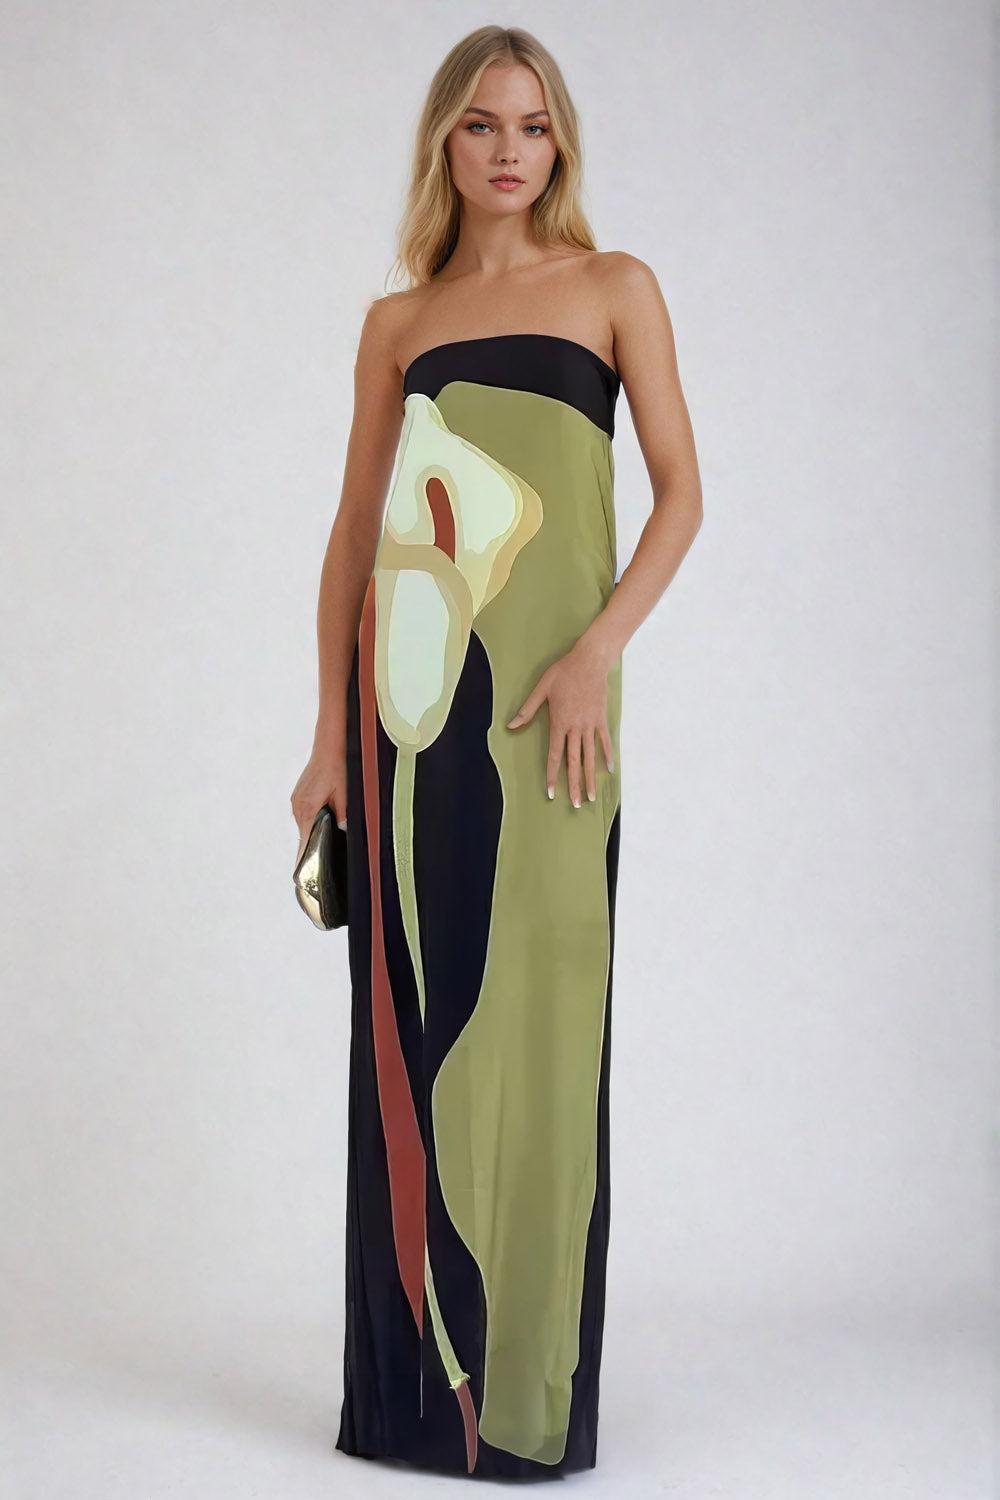 Abstract Floral Print Tube Top Maxi Dress - Zielona